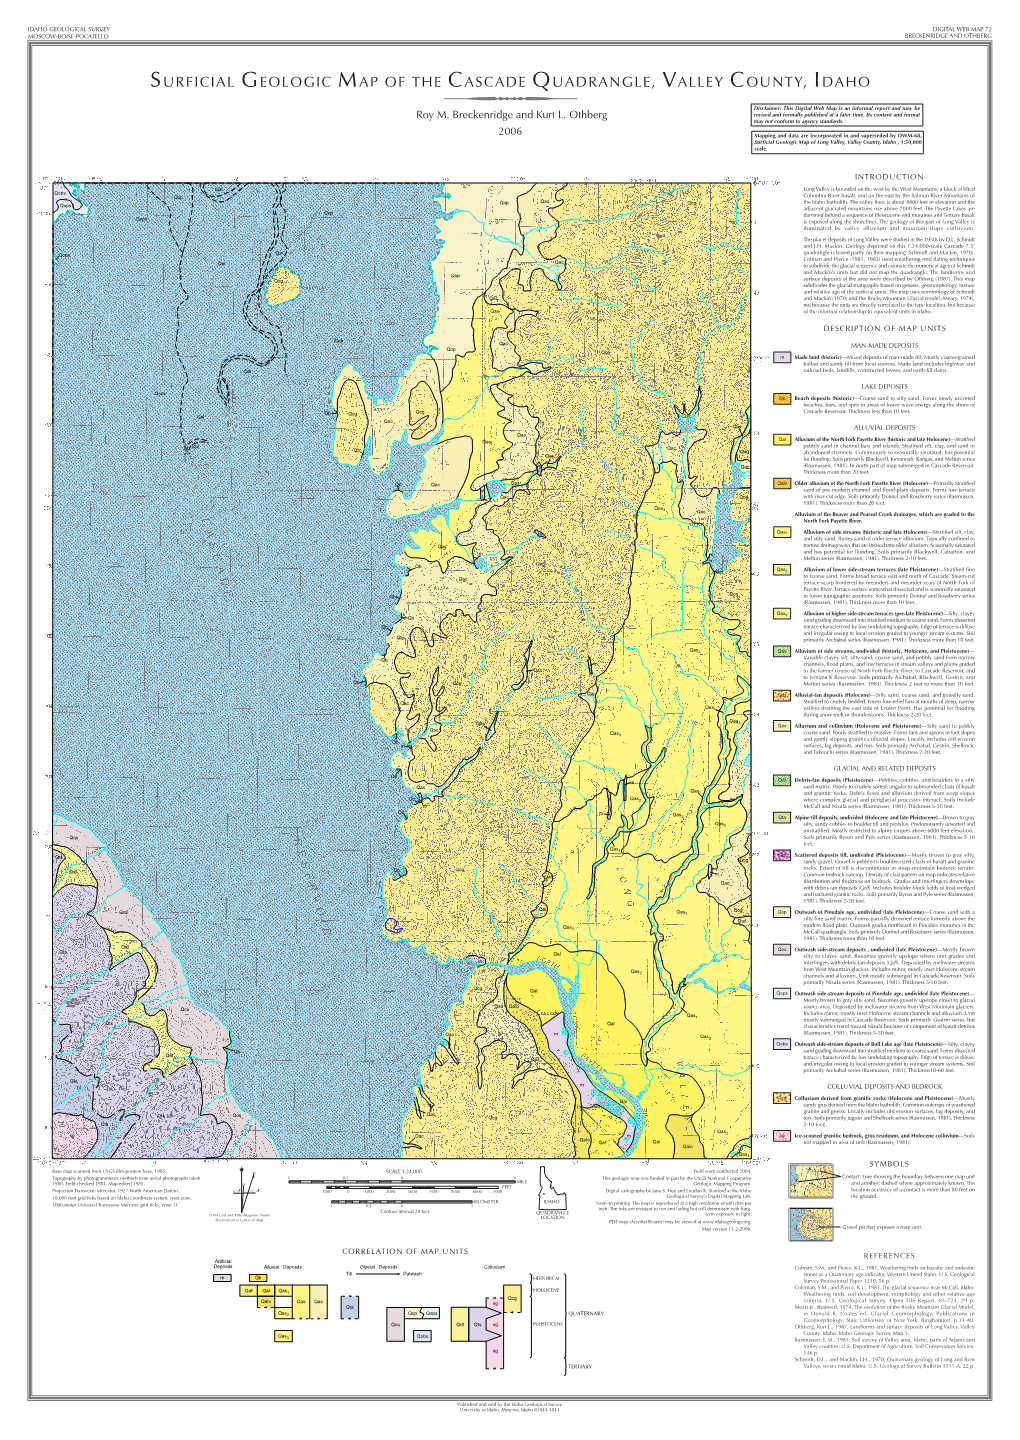 Surficial Geologic Map of the Cascade Quadrangle, Valley County, Idaho